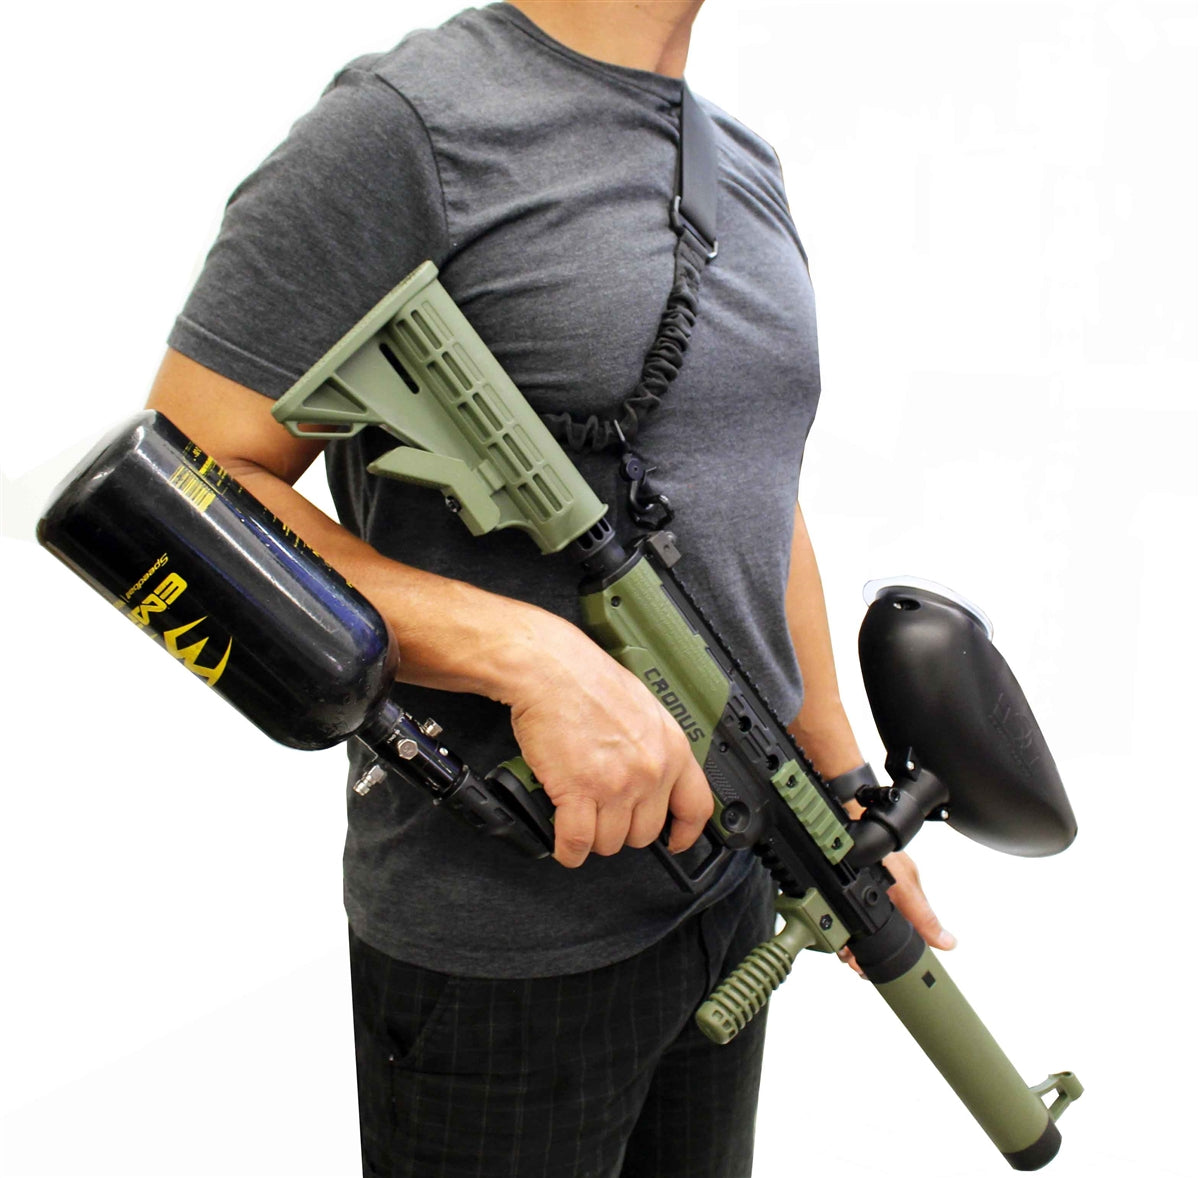 TRINITY one point sling compatible with Tippmann Cronus paintball gun.